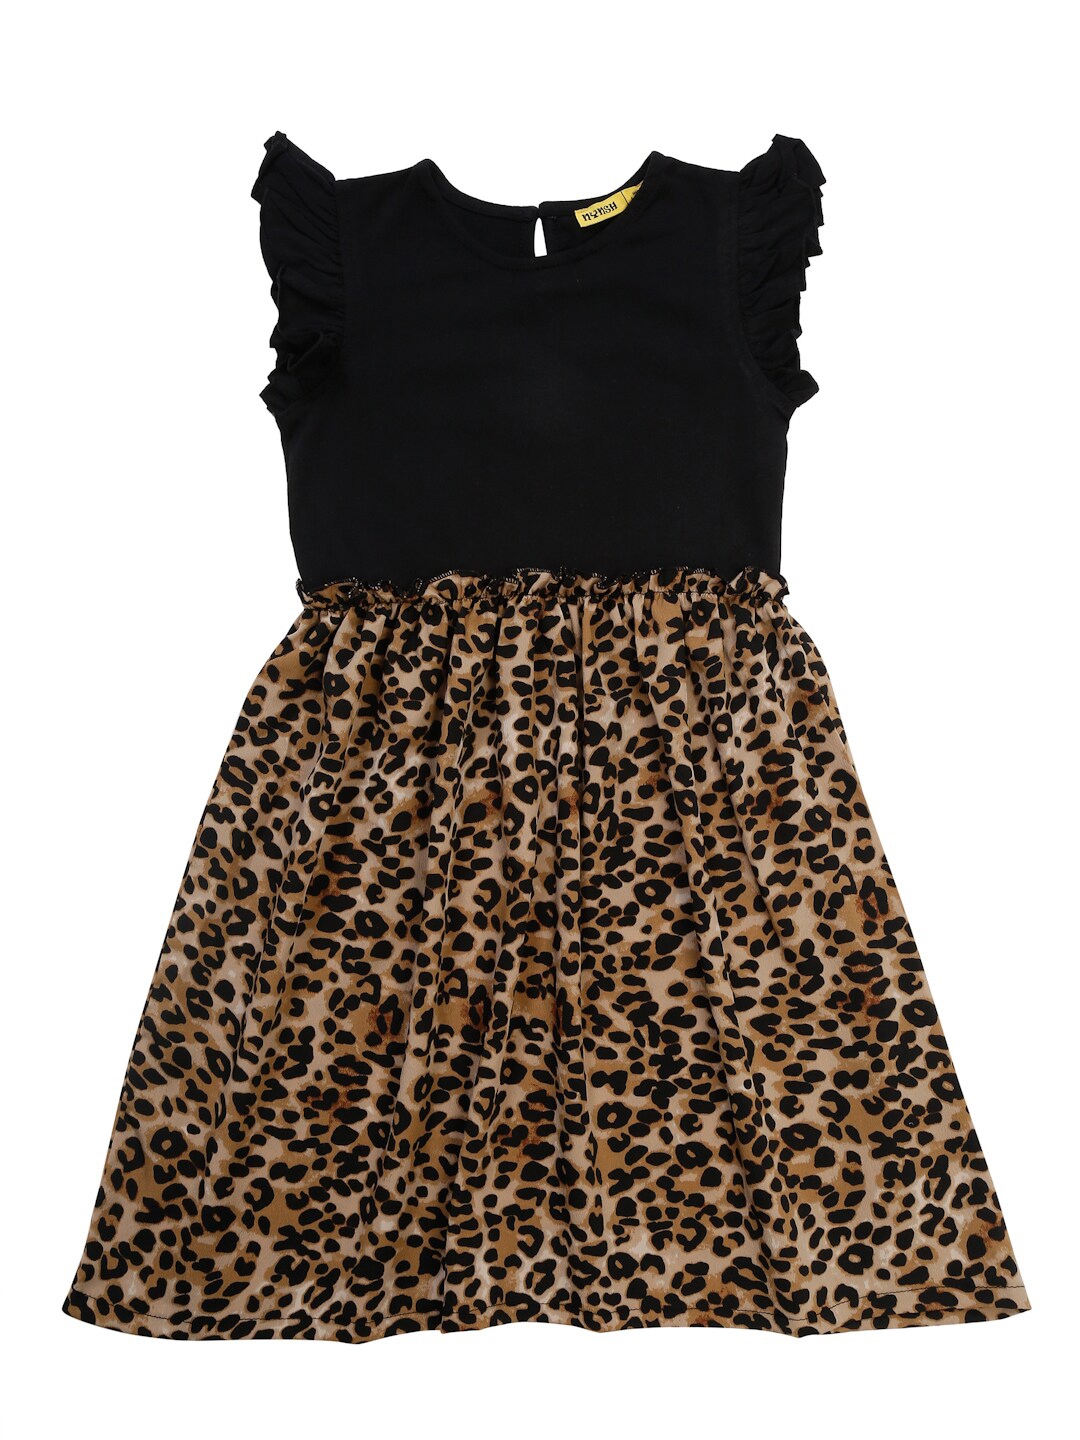 Buy NYNSH PlusS Kids Girls Black Animal Printed Fit & Flare Dress ...